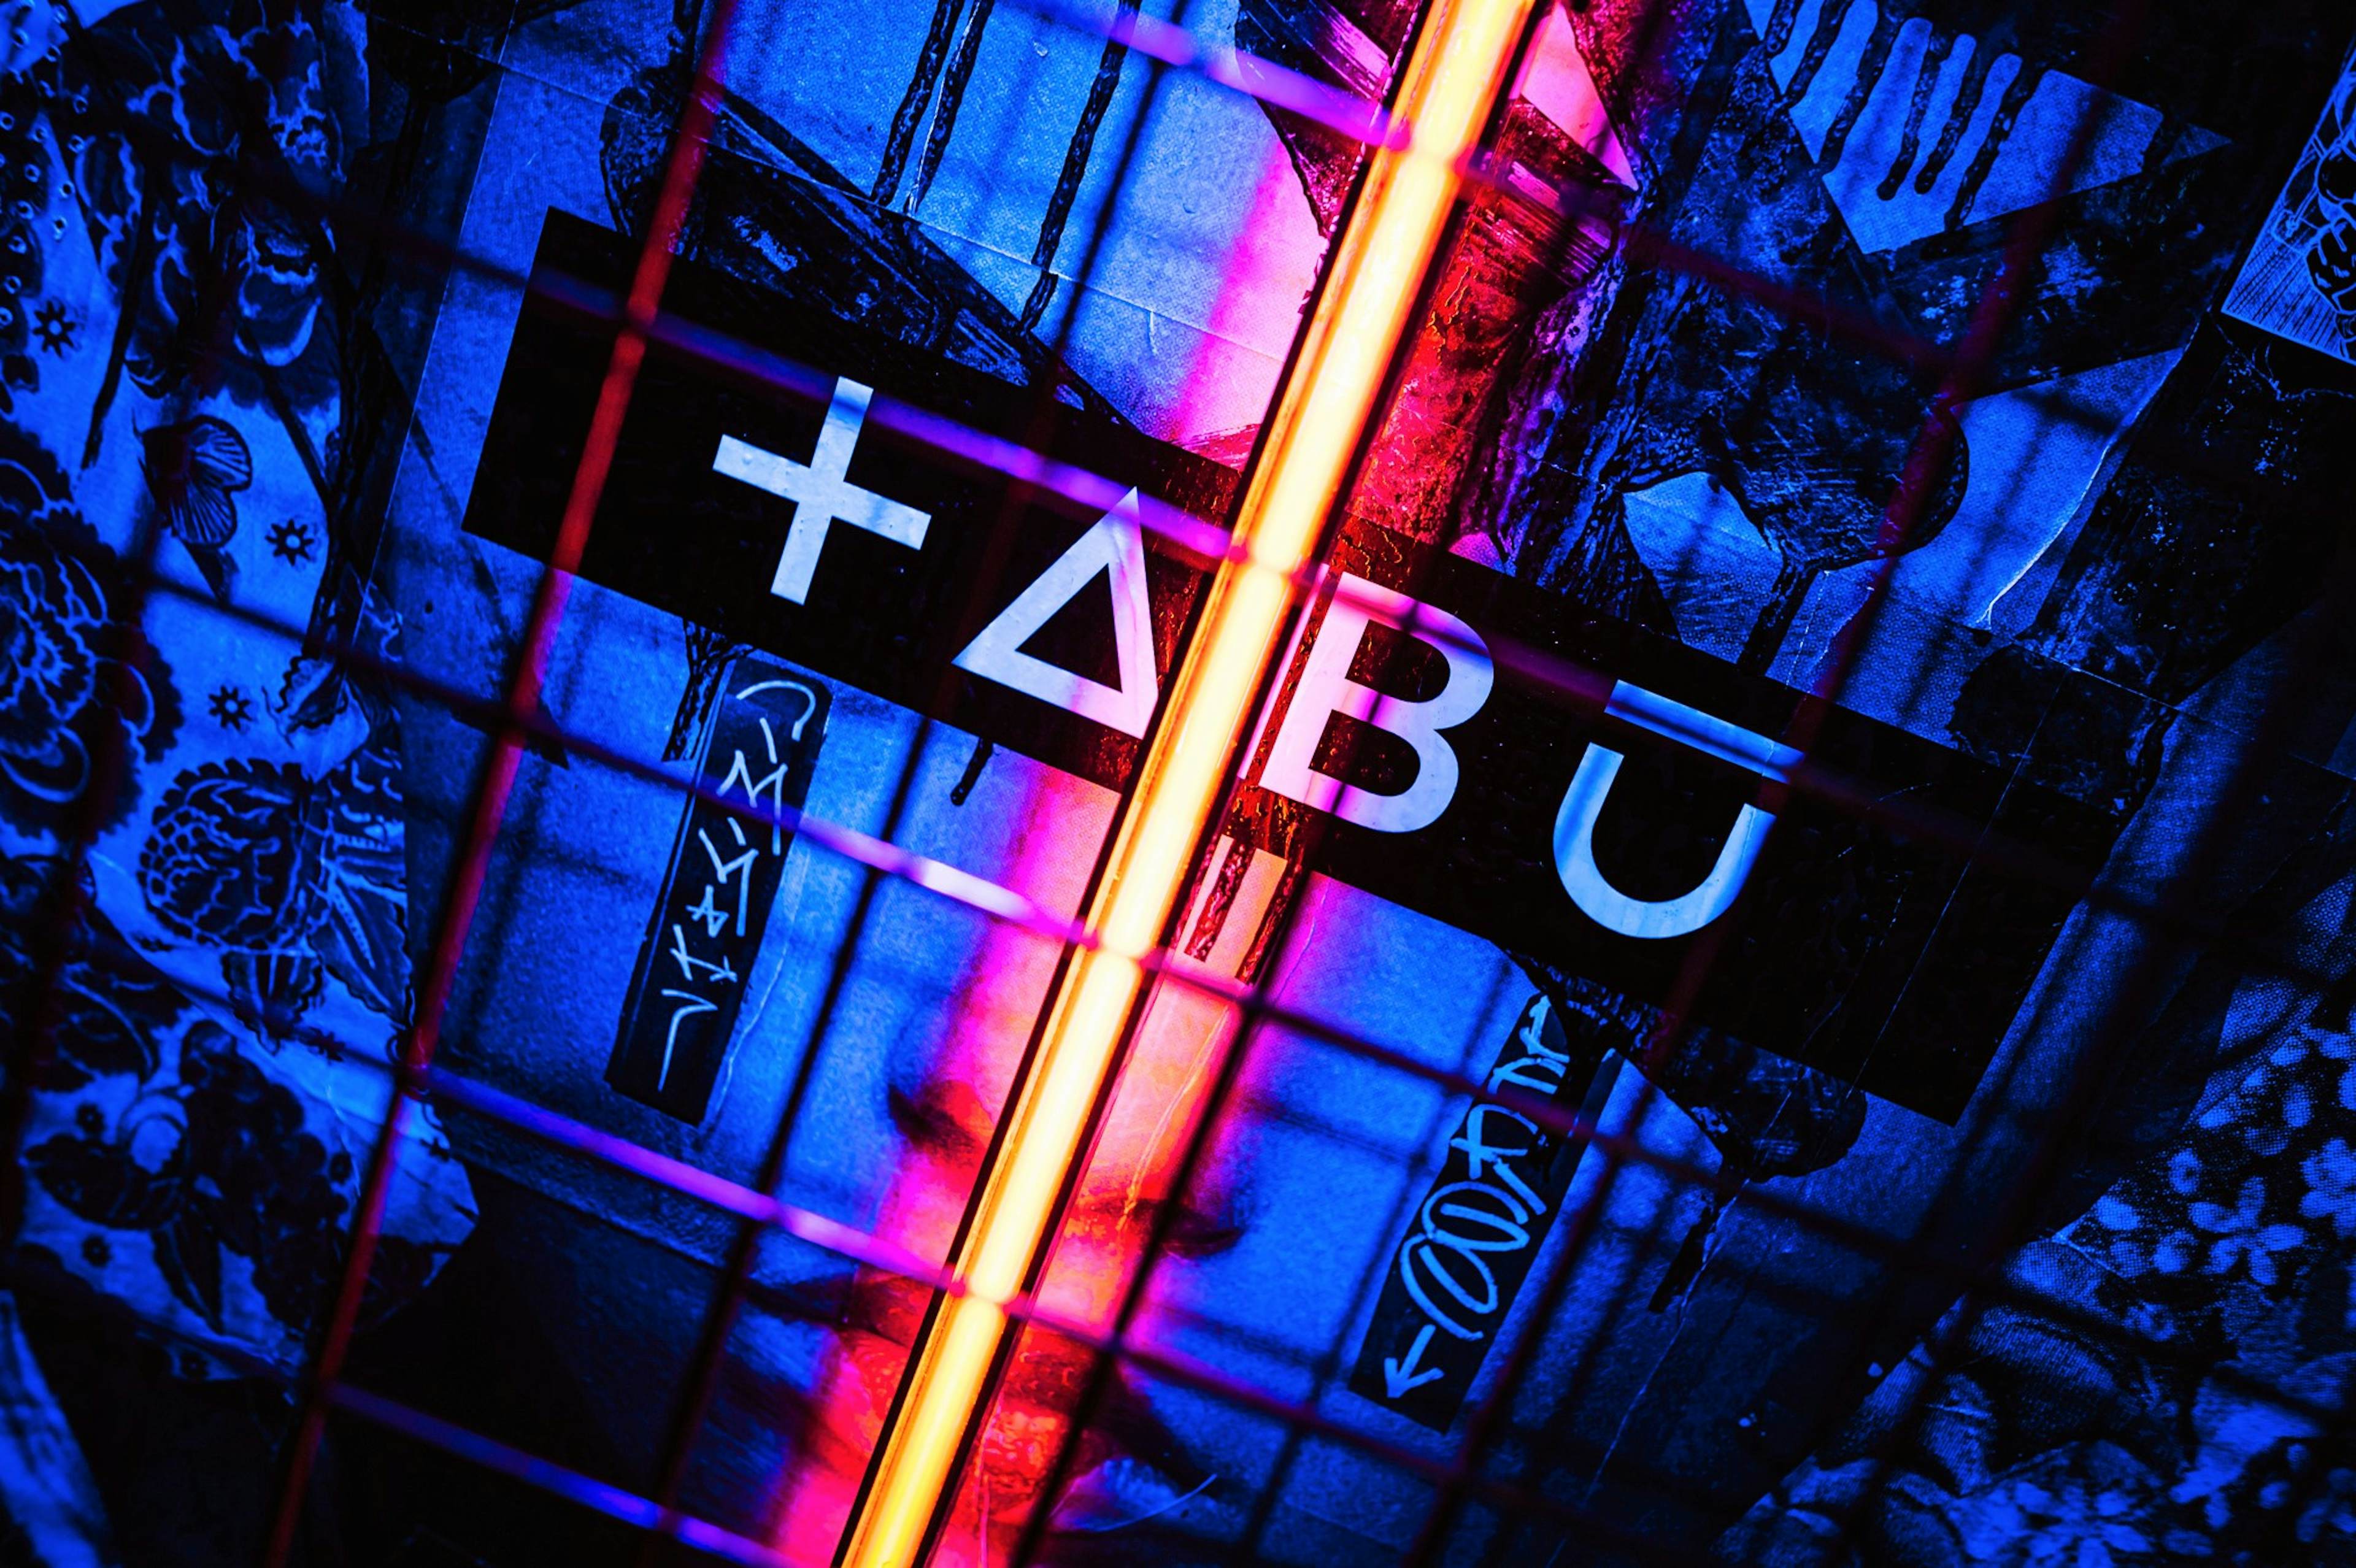 Tabu London - image 2